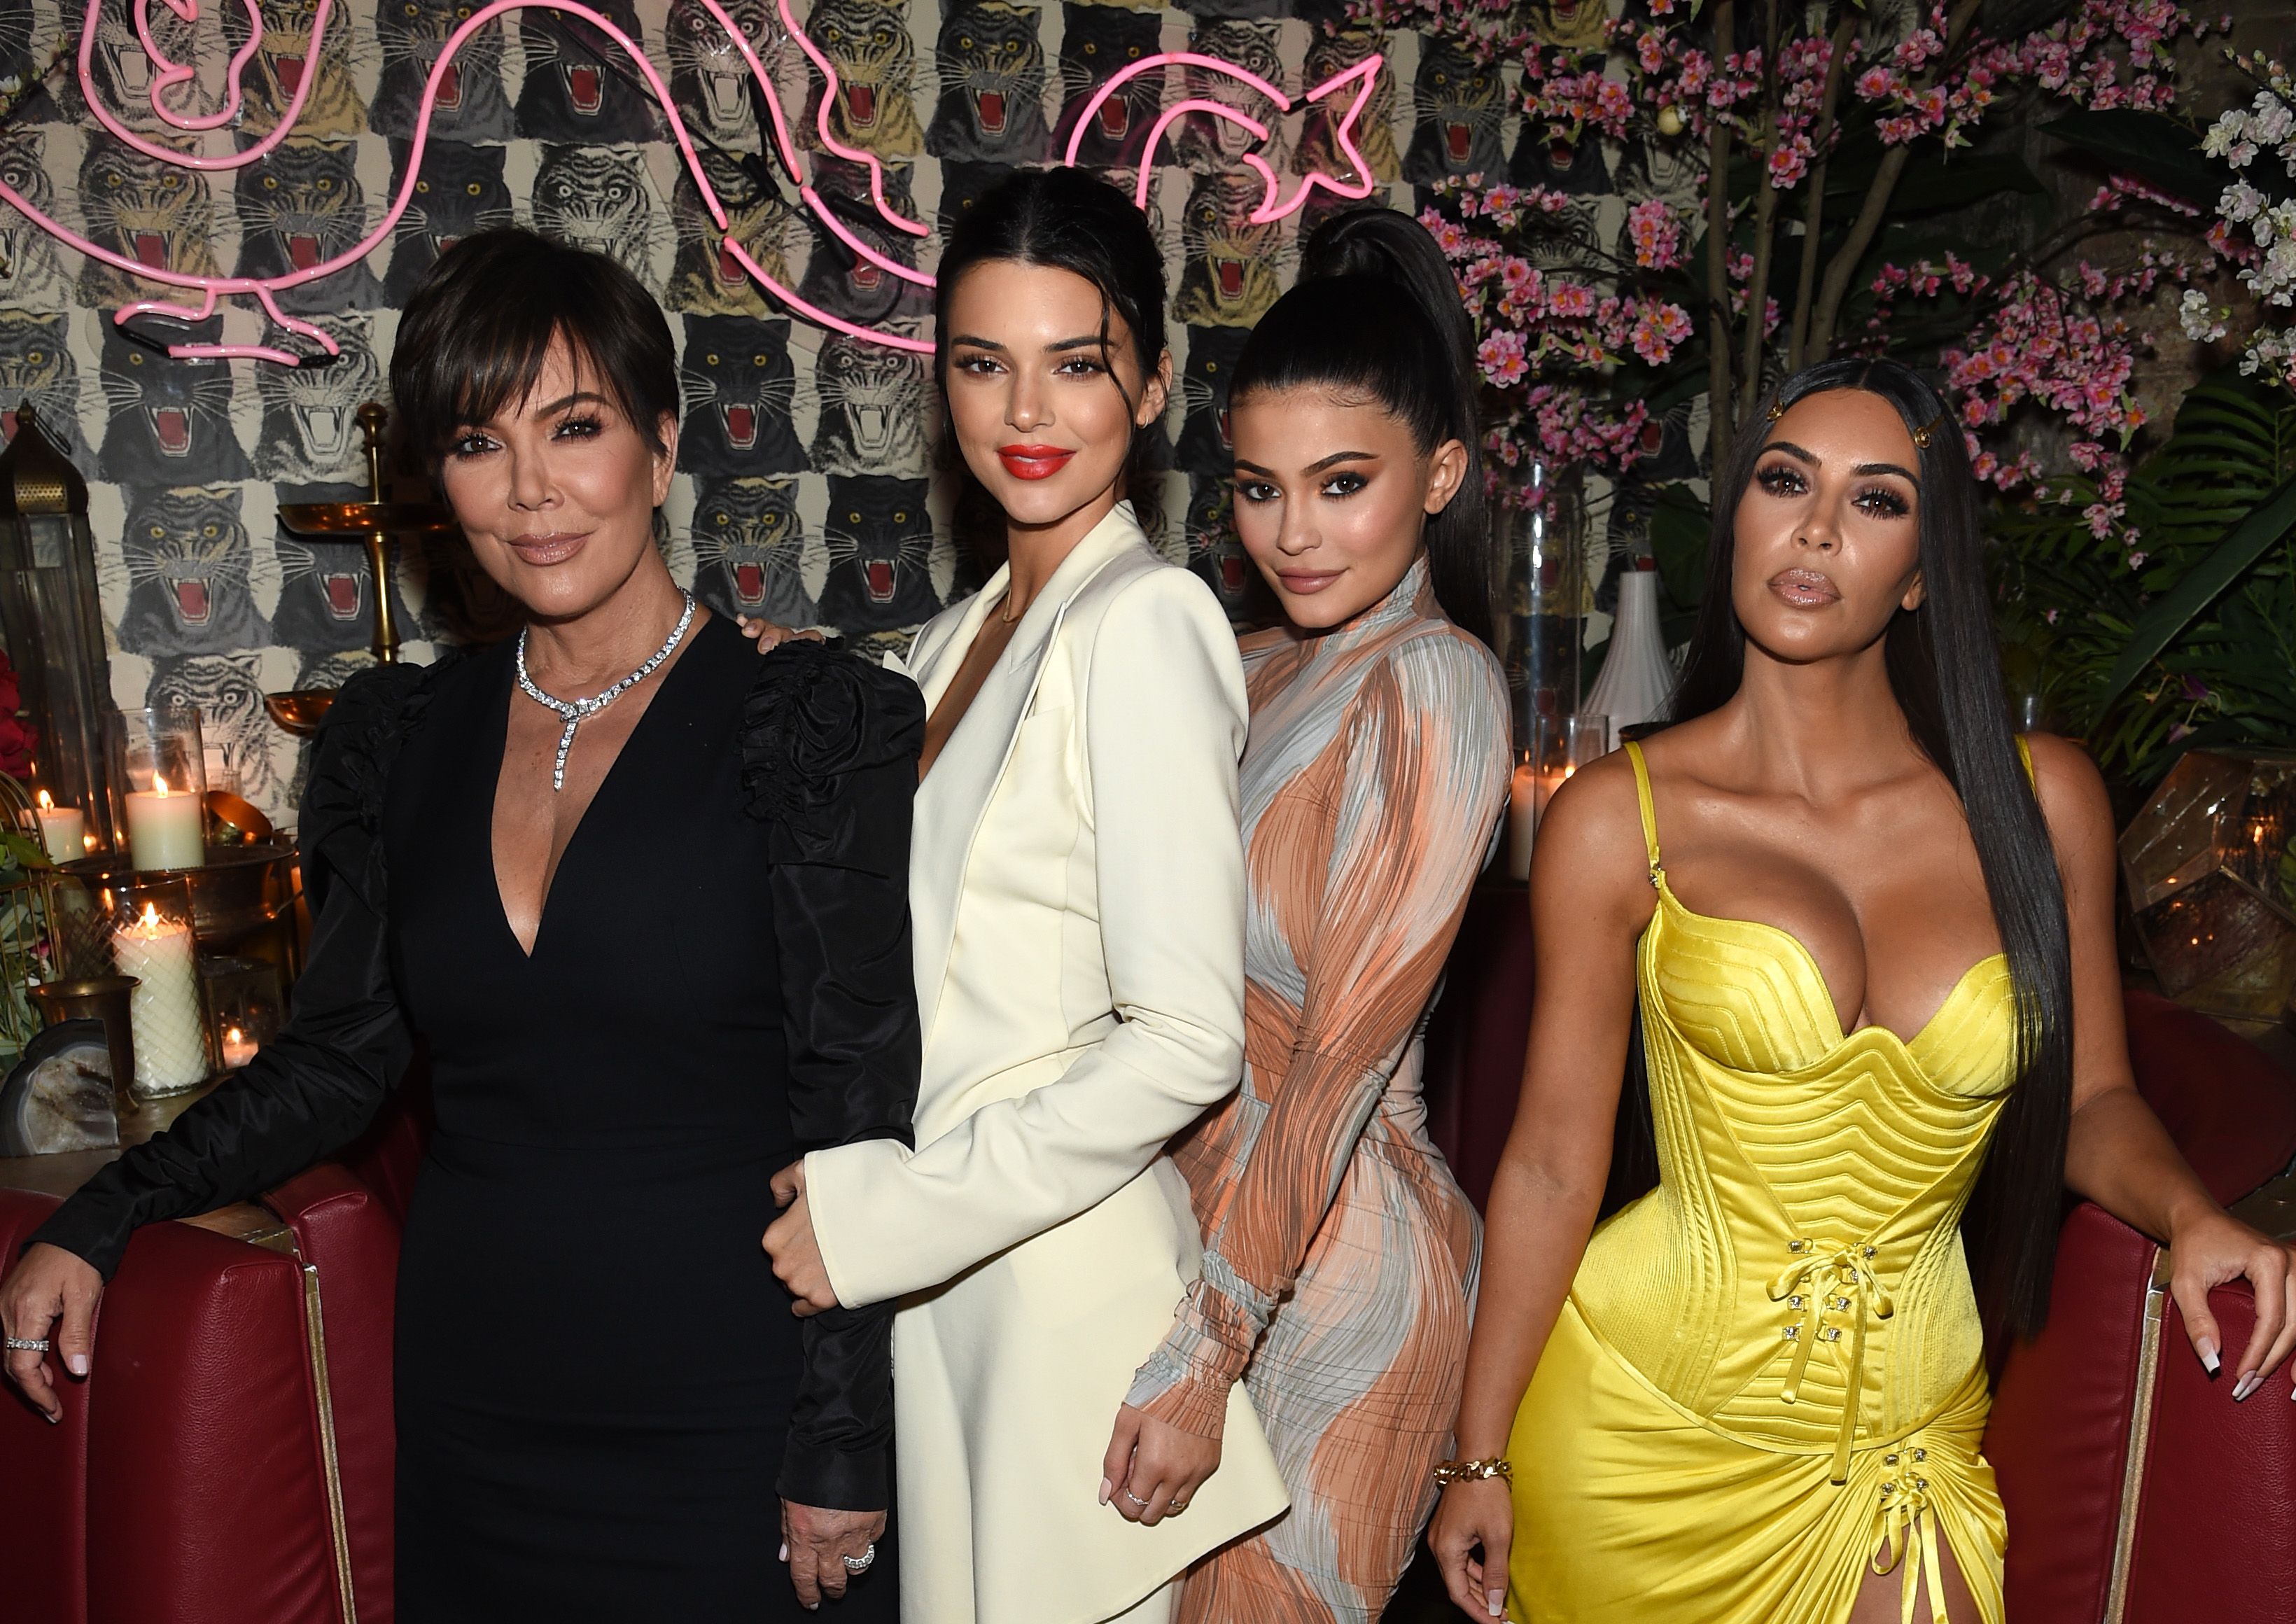 Why Did the Kardashians Skip the 2022 Emmy Awards?